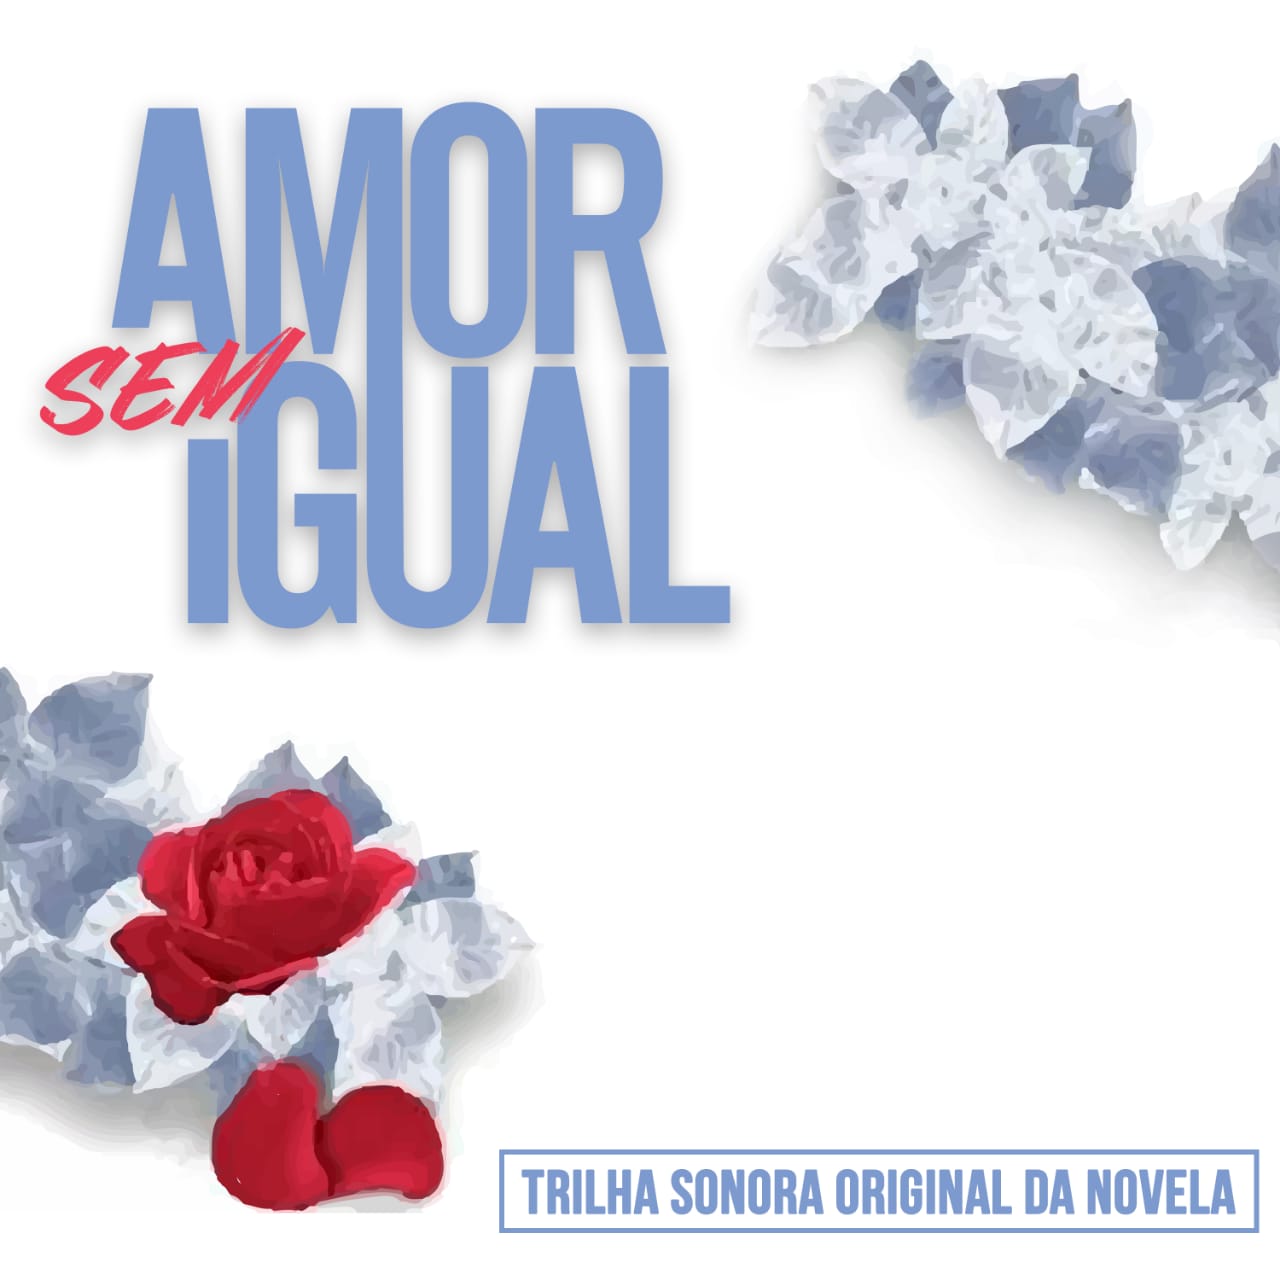 noticia Banda Universos lança “Amor Sem Igual”, trilha de abertura da novela da Record TV